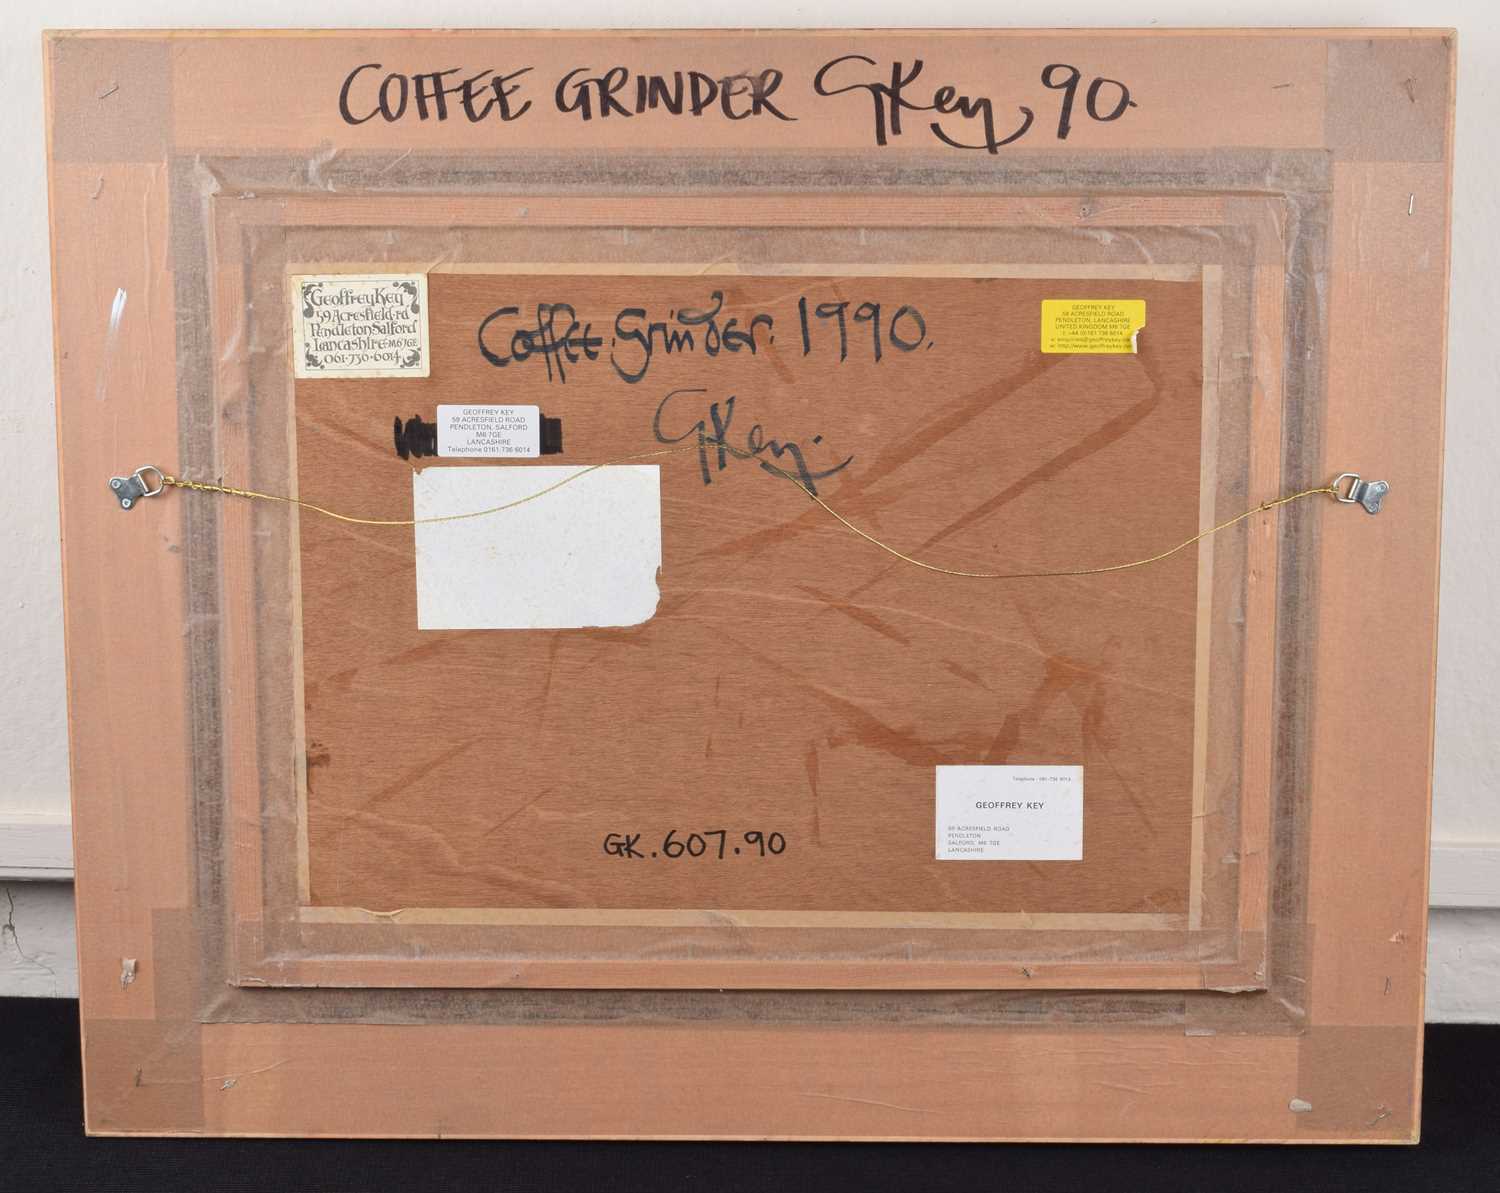 Geoffrey Key (British 1941-) "Coffee Grinder" - Image 3 of 3